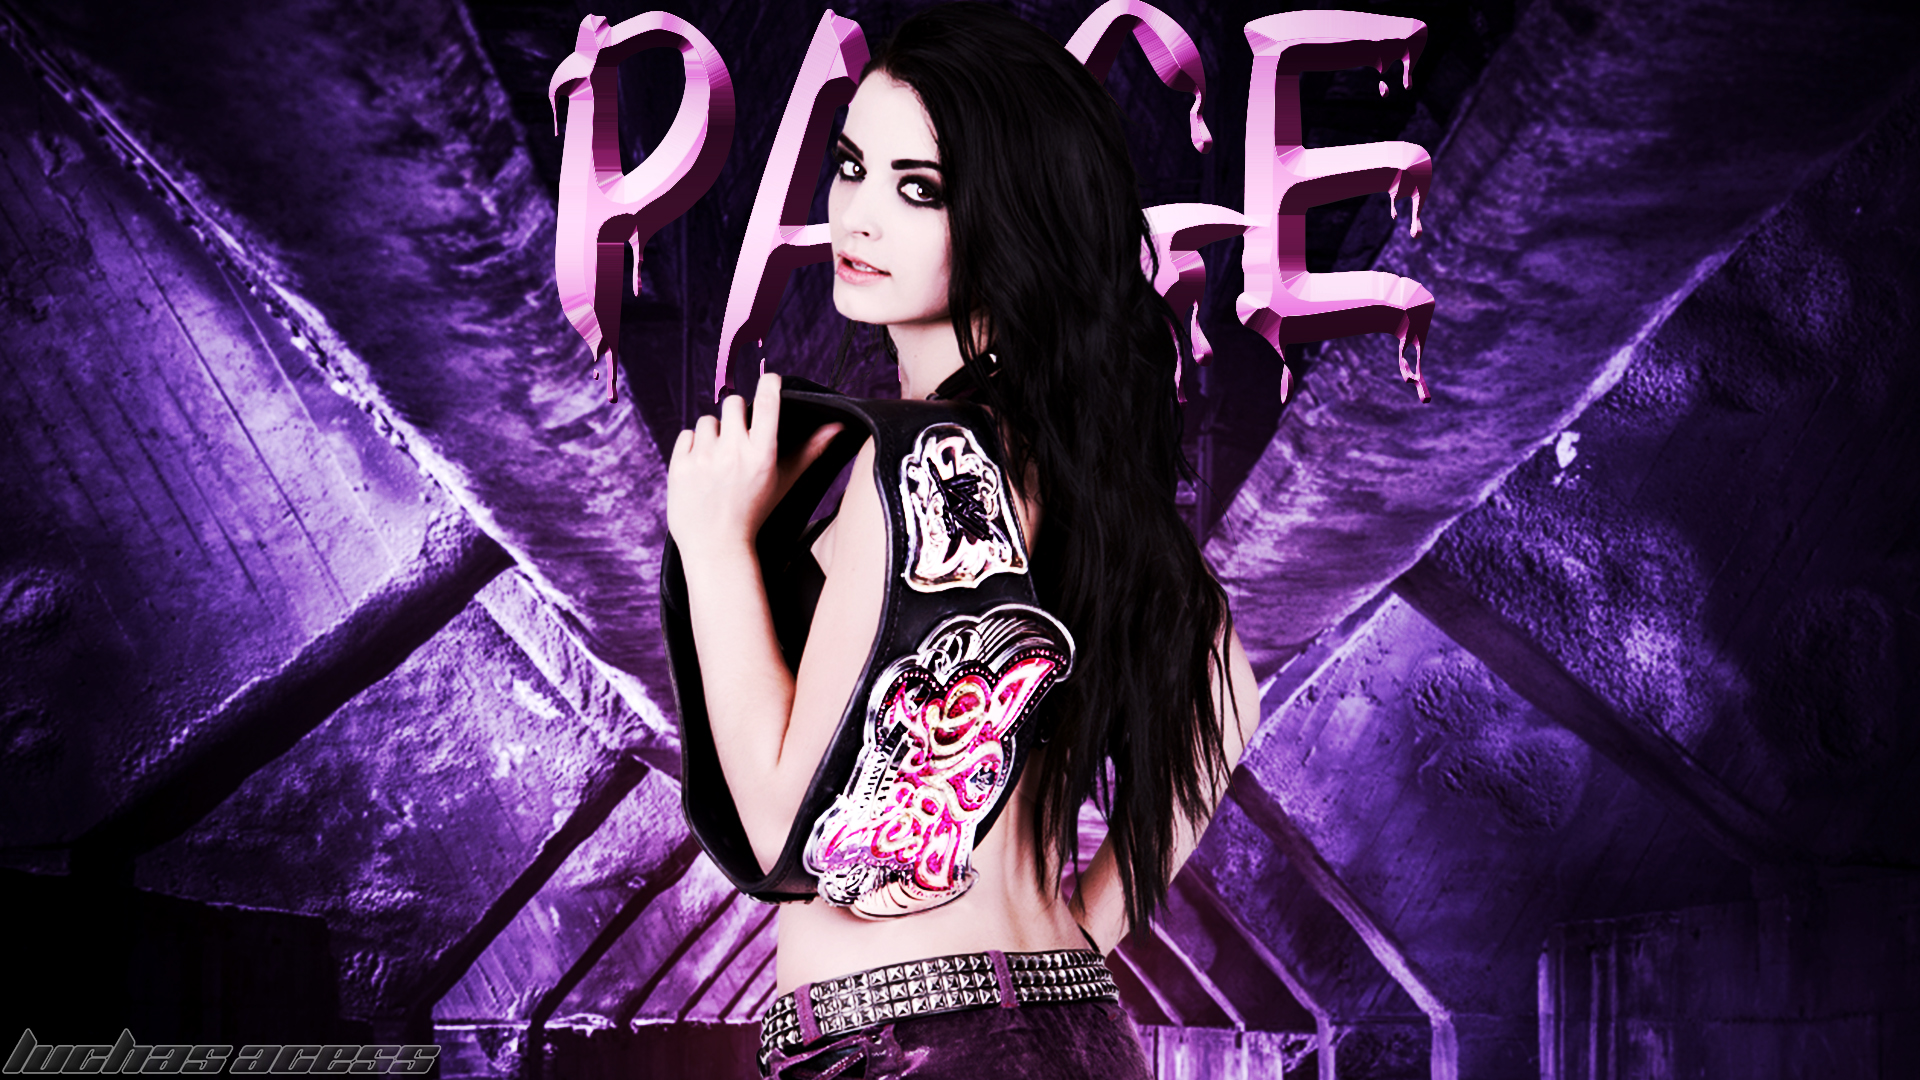 Wallpaper Paige 2014